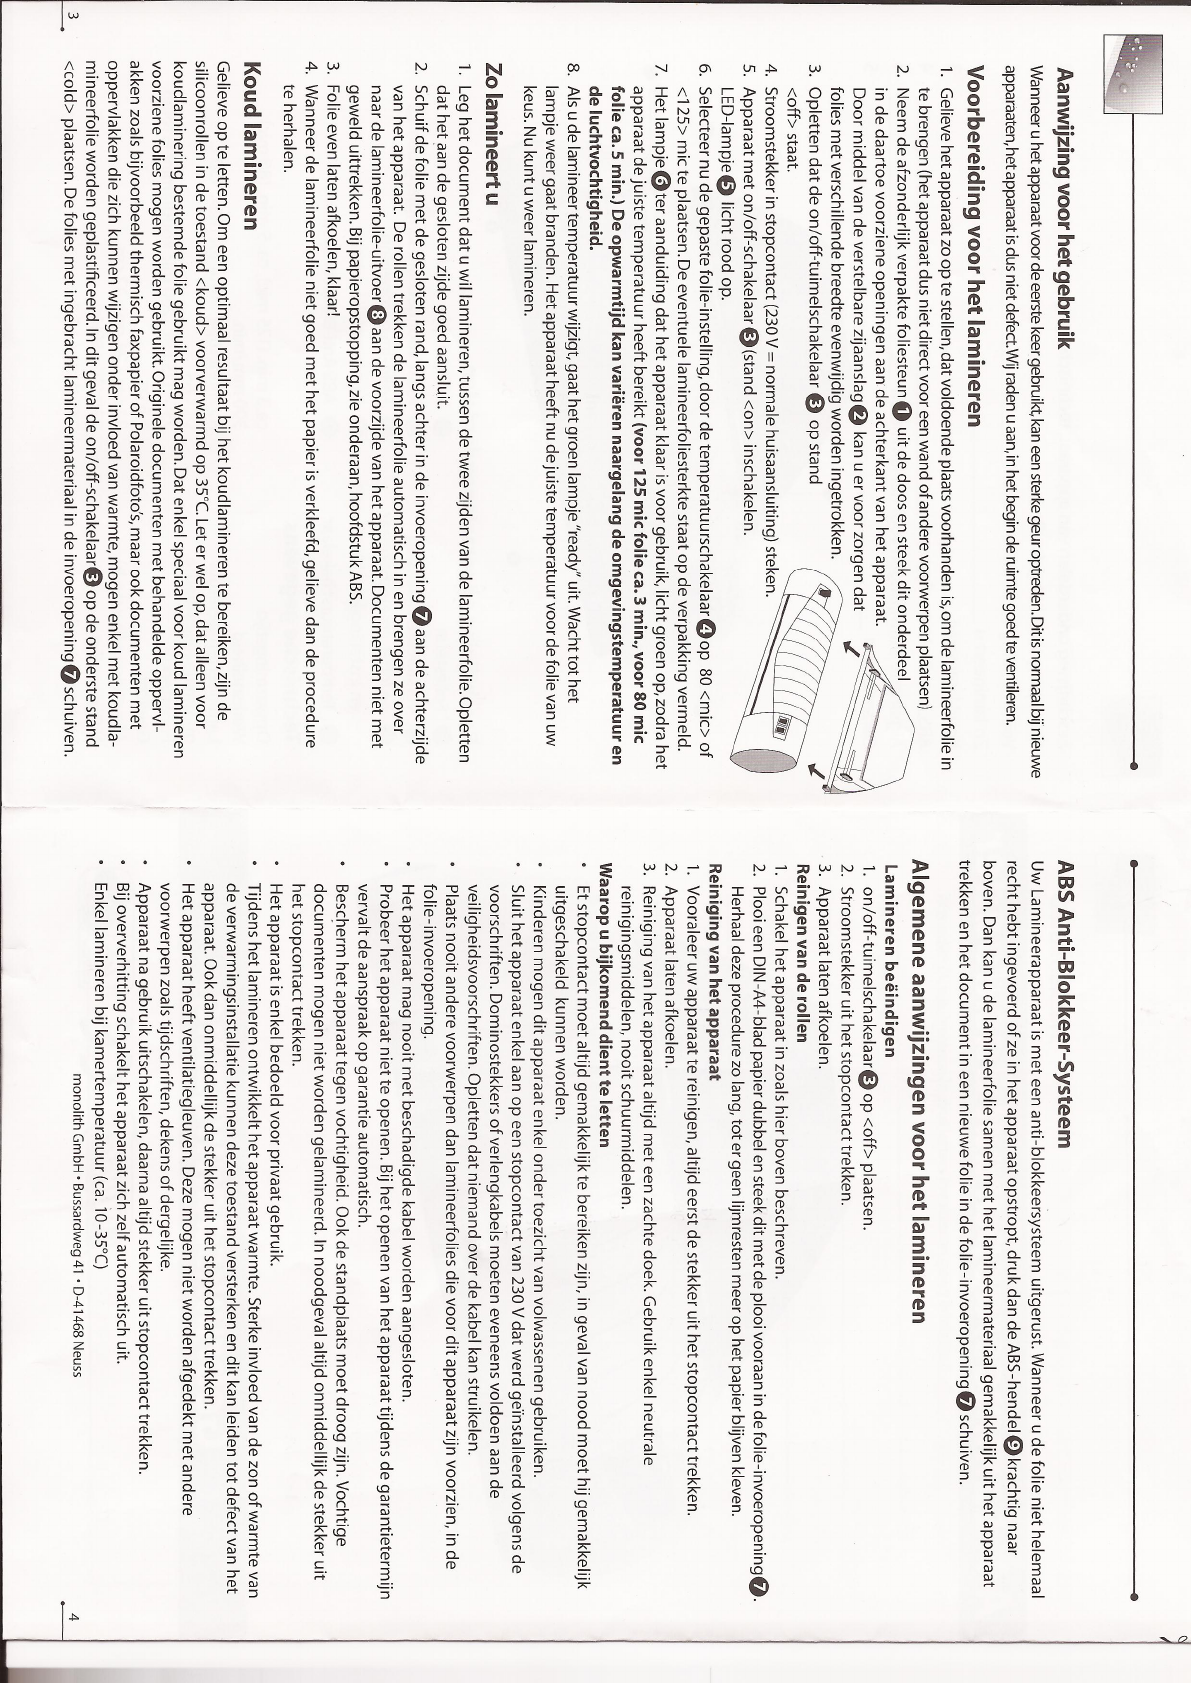 Handleiding A4 Lamineerapparaat 12 (pagina 1 van 2) (Nederlands)